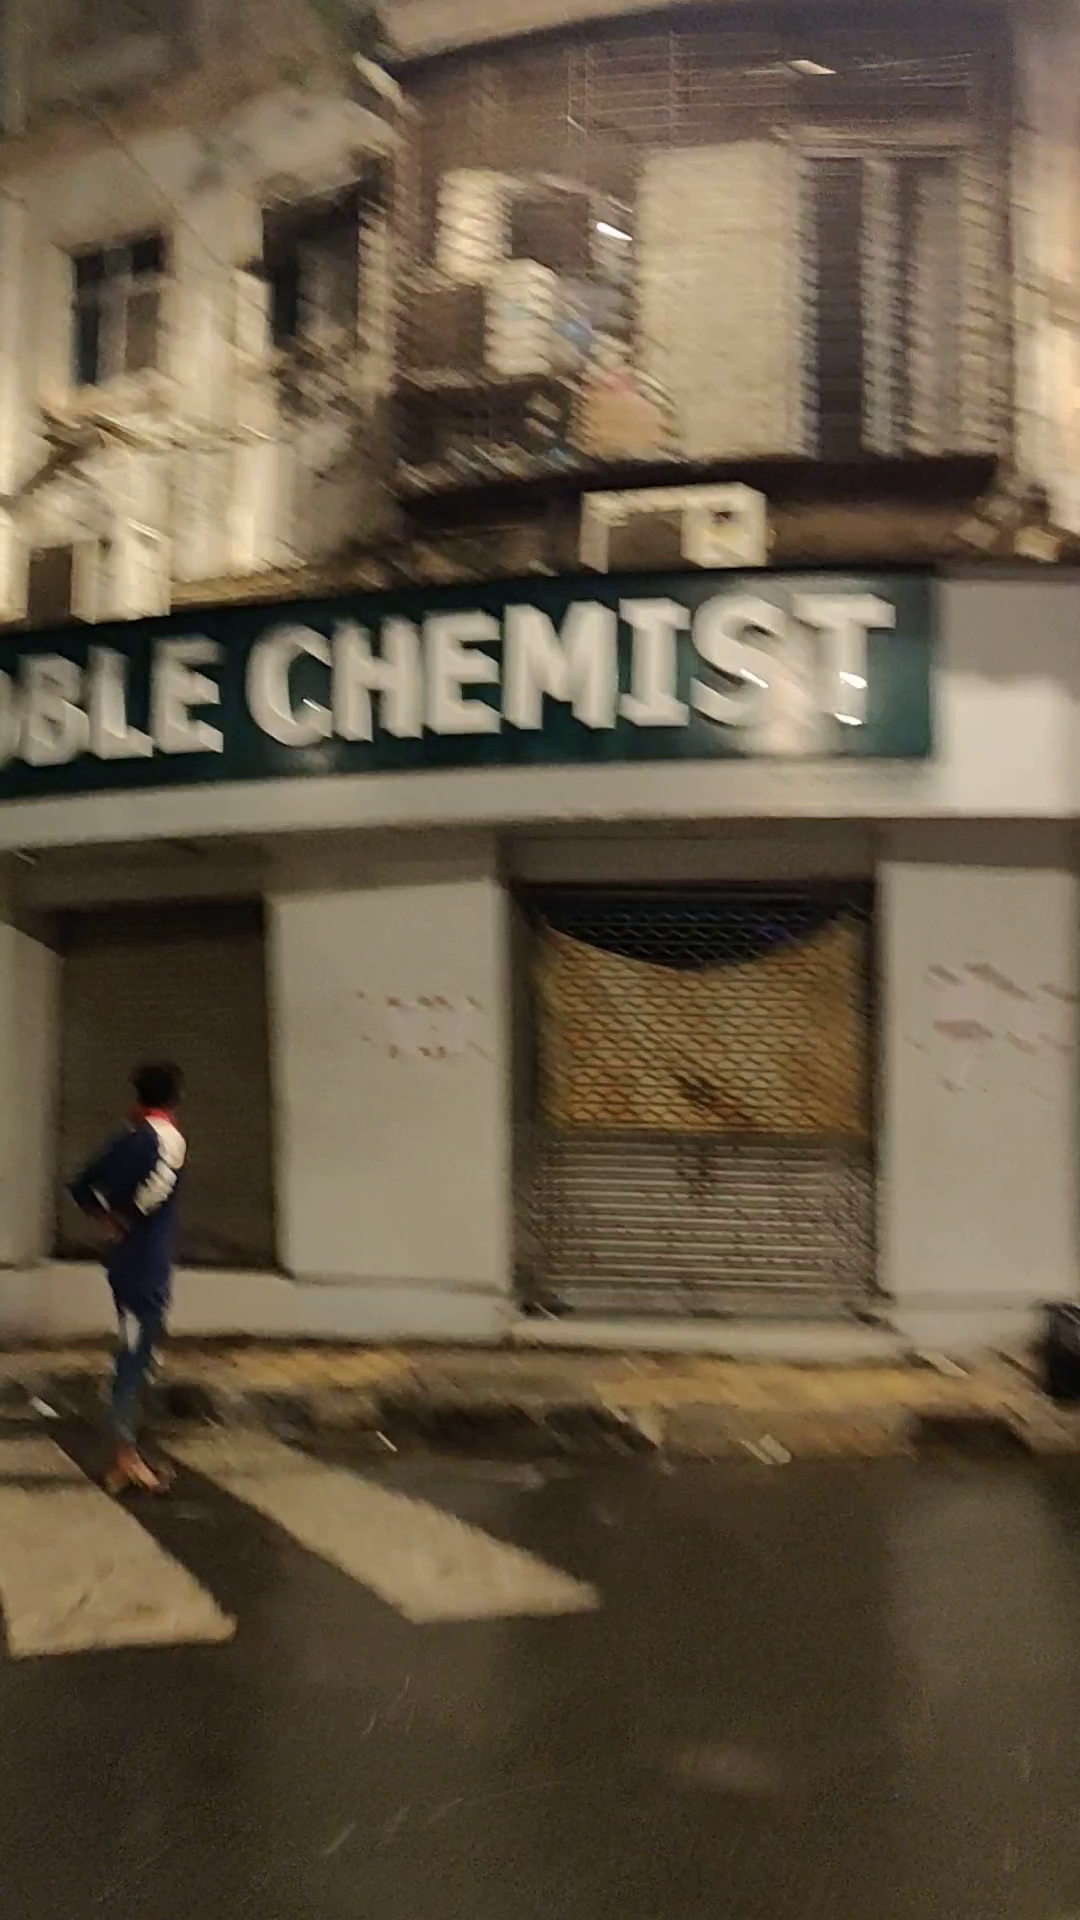 Noble Chemist